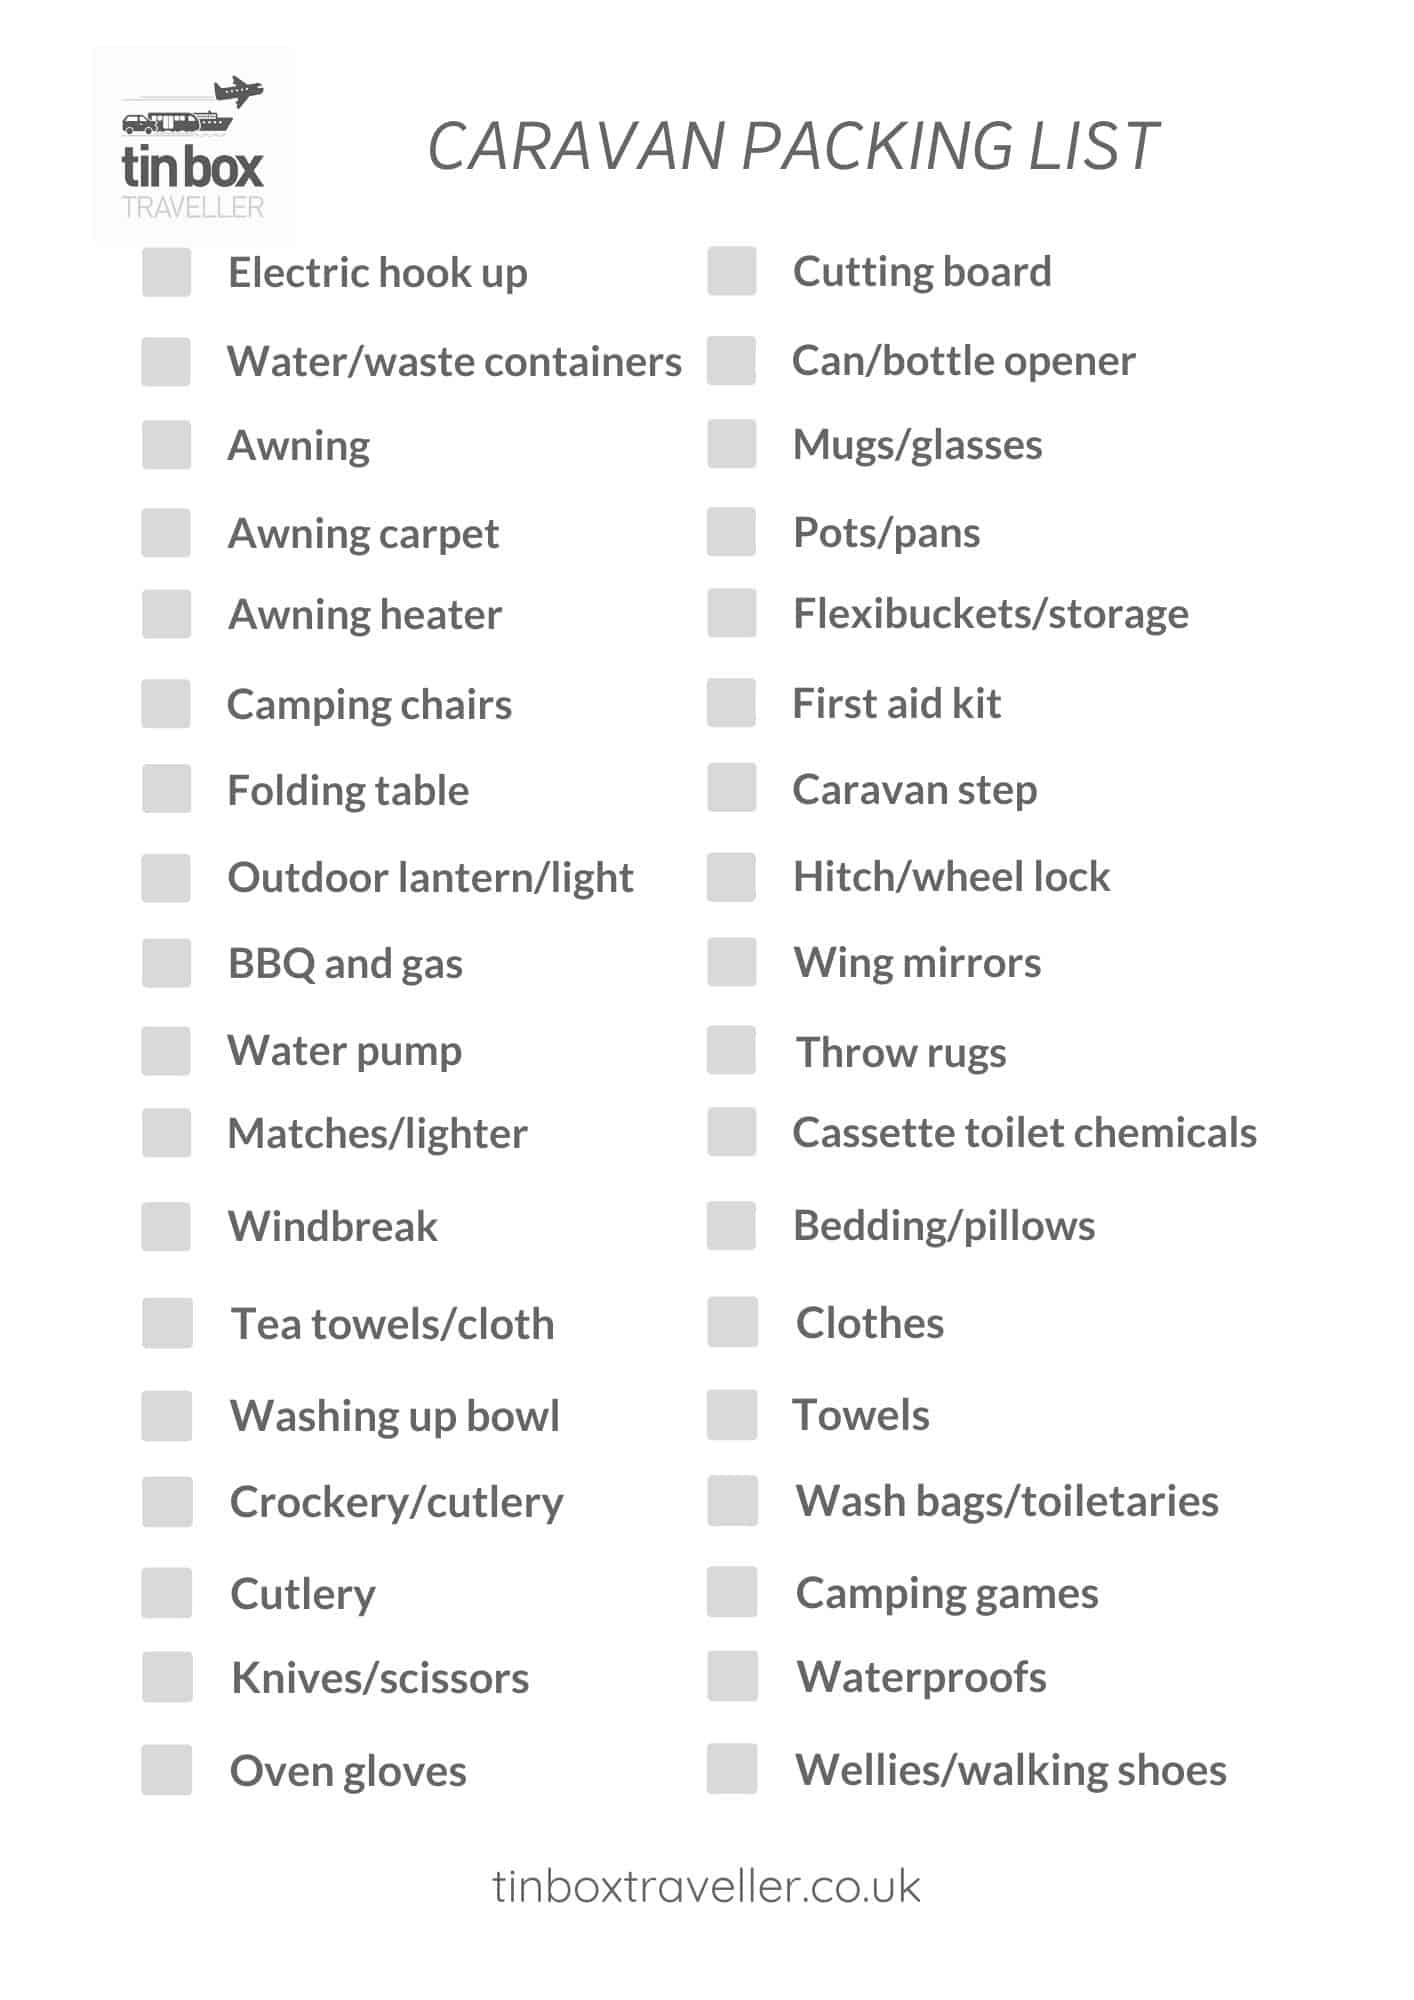 Essential caravan equipment checklist + printable packing list